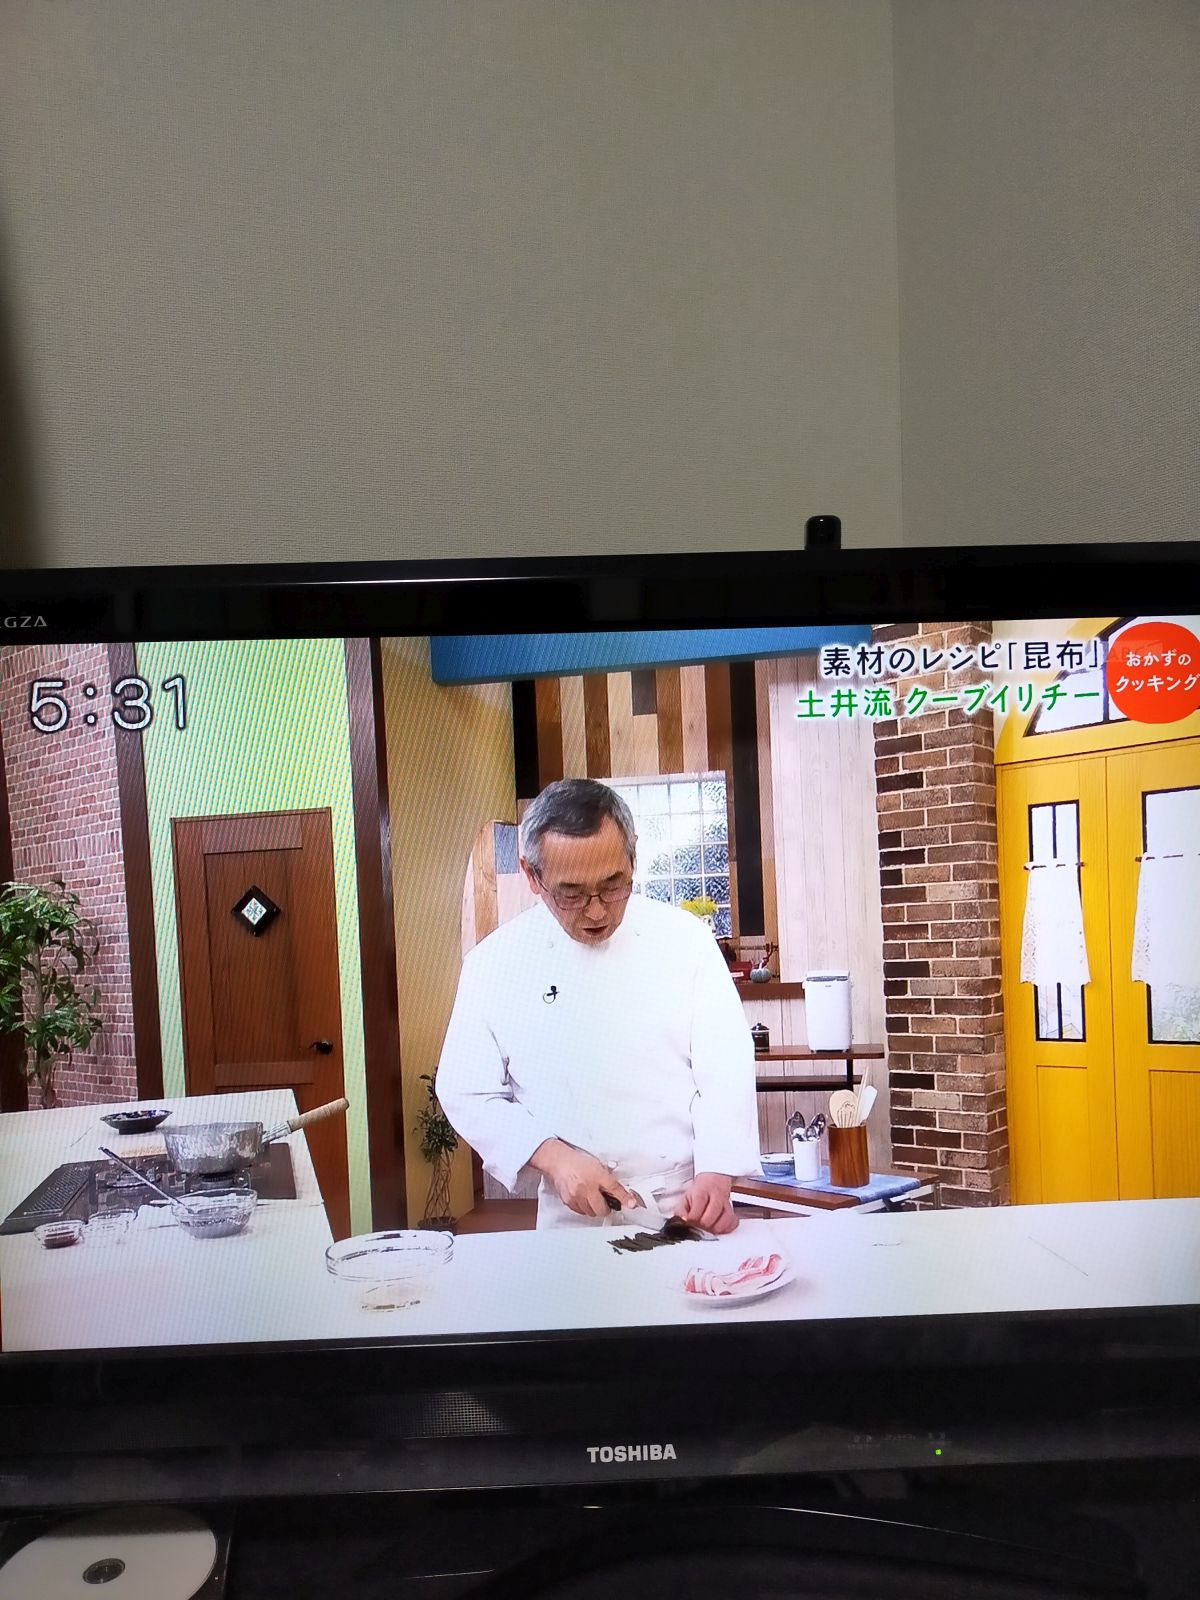 土井先生の料理番組